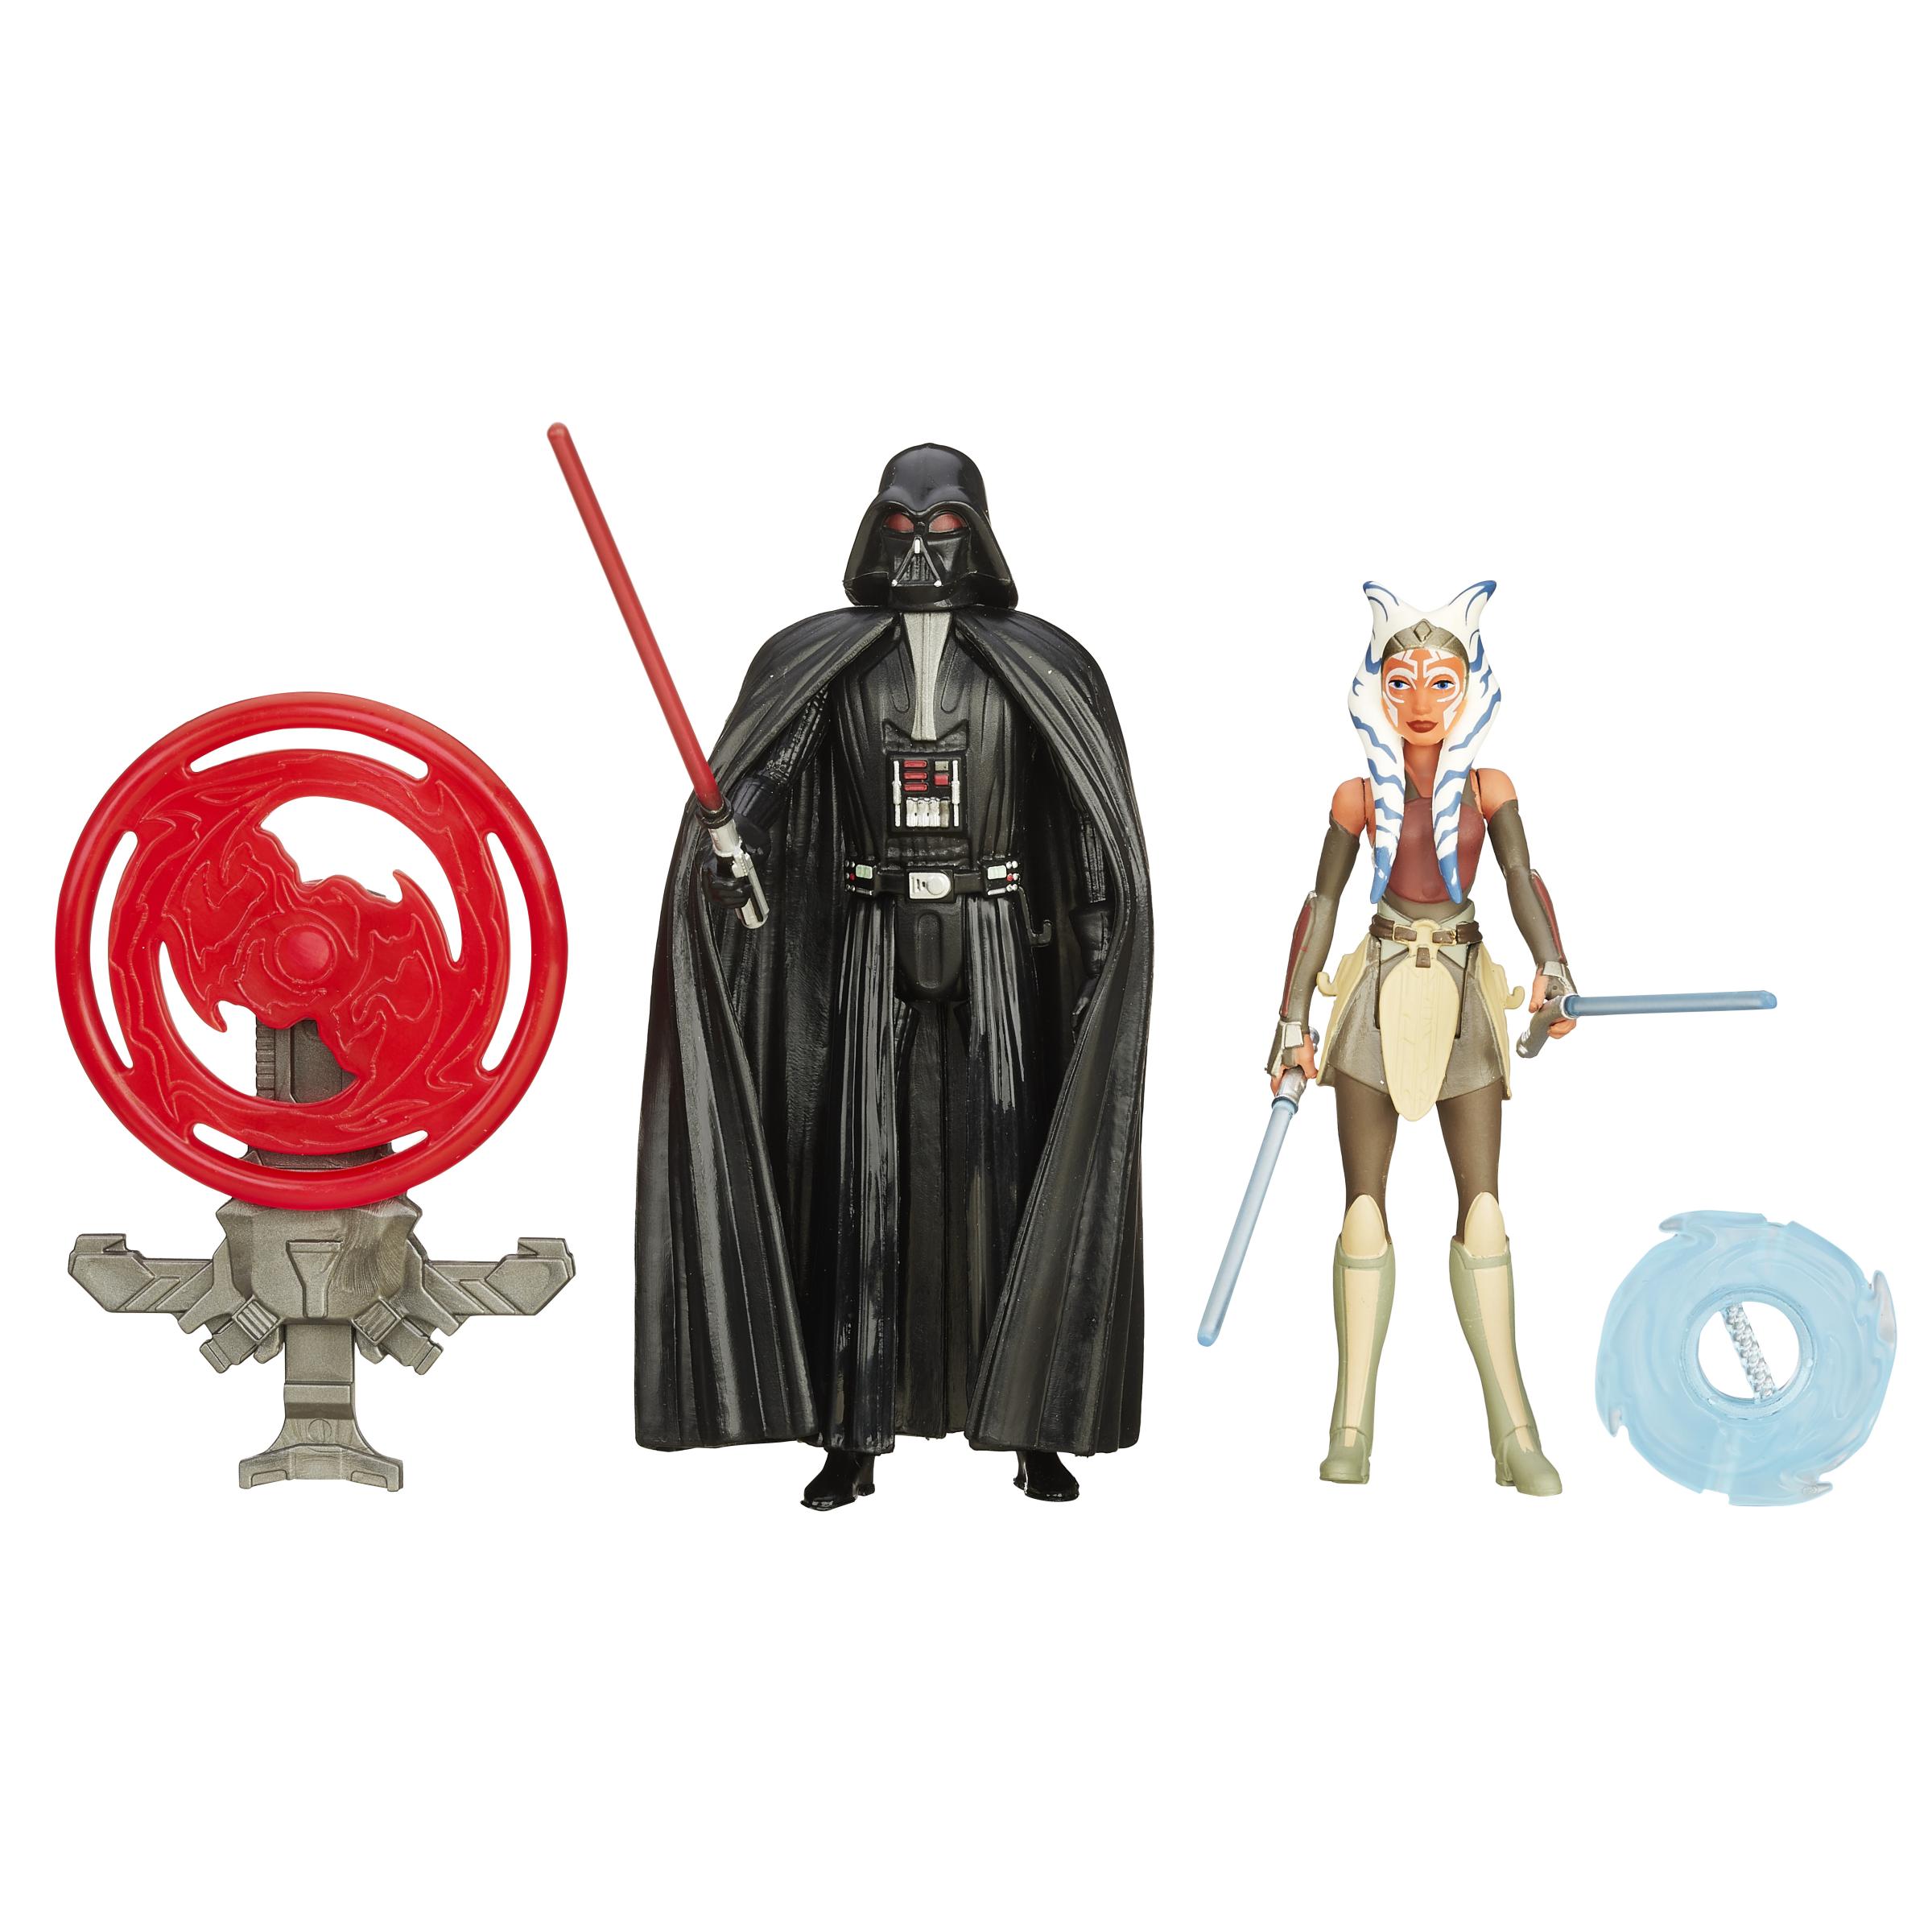 Star Wars The Force Awakens - Darth Vader and Ahsoka Tano